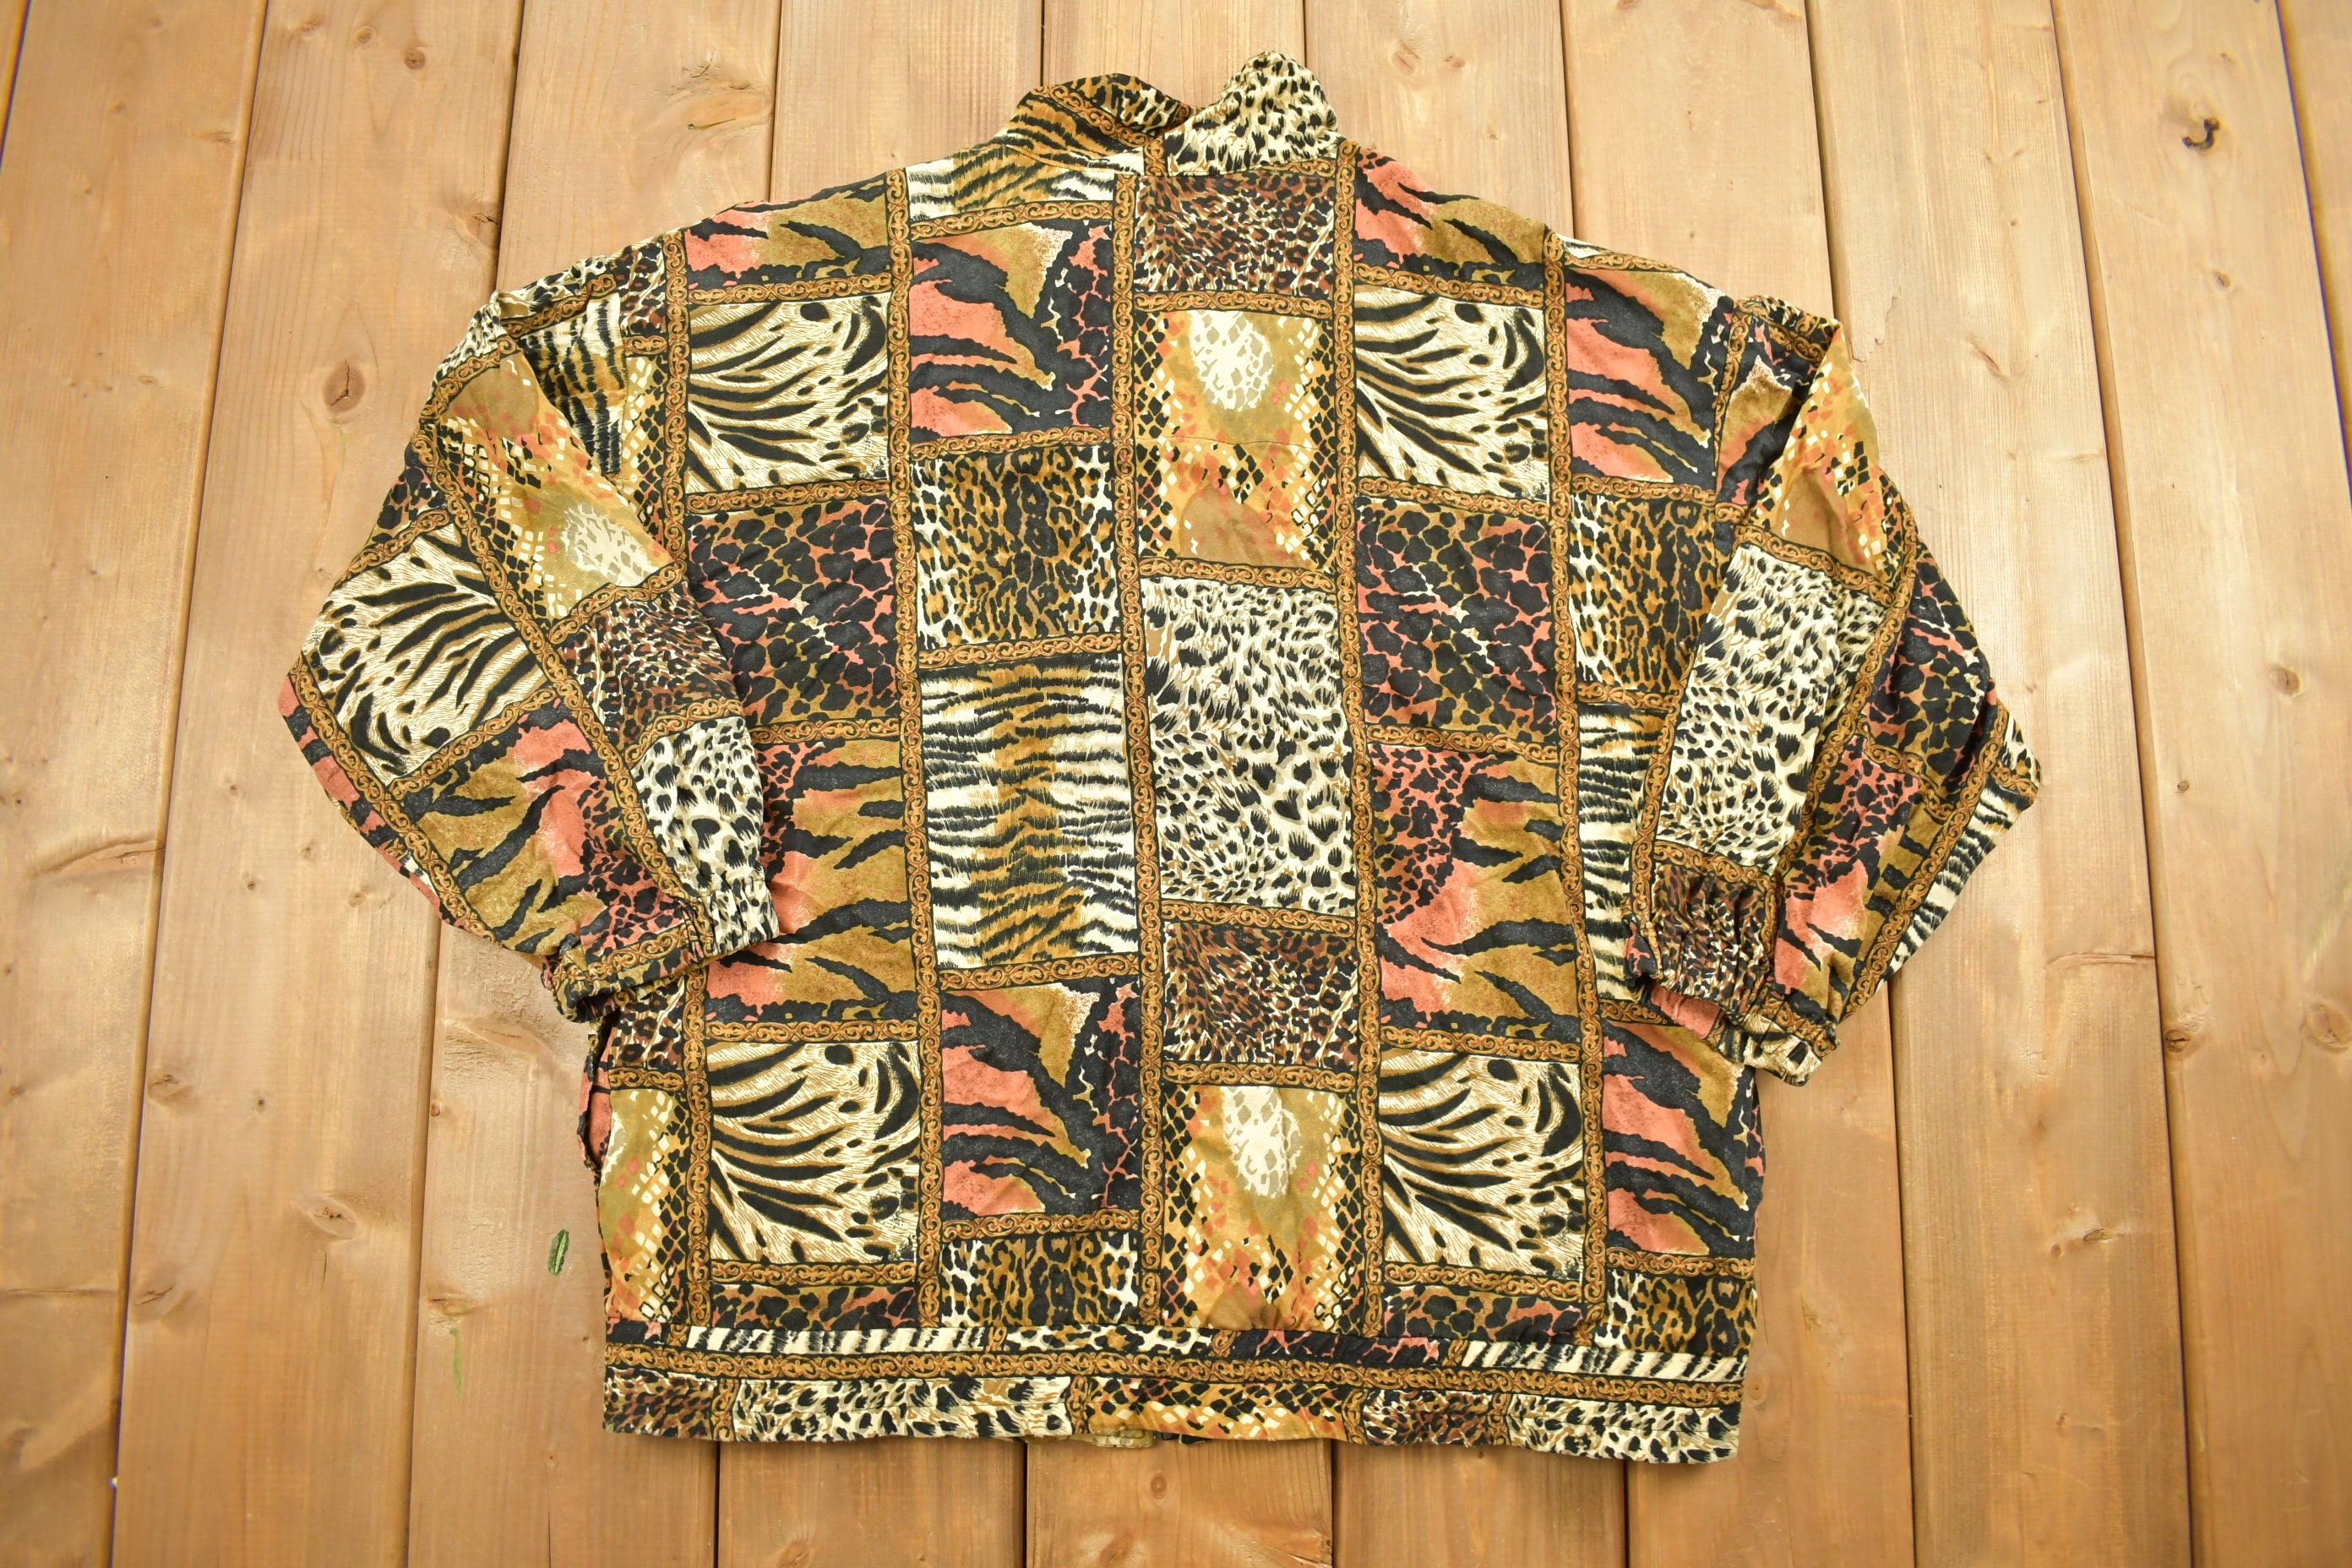 Vintage 1990s Erin London All Over Print Windbreaker Jacket / Leopard /  Athletic Spring Summer Sportswear / Streetwear / Athleisure / Active -  Jackets & Coats